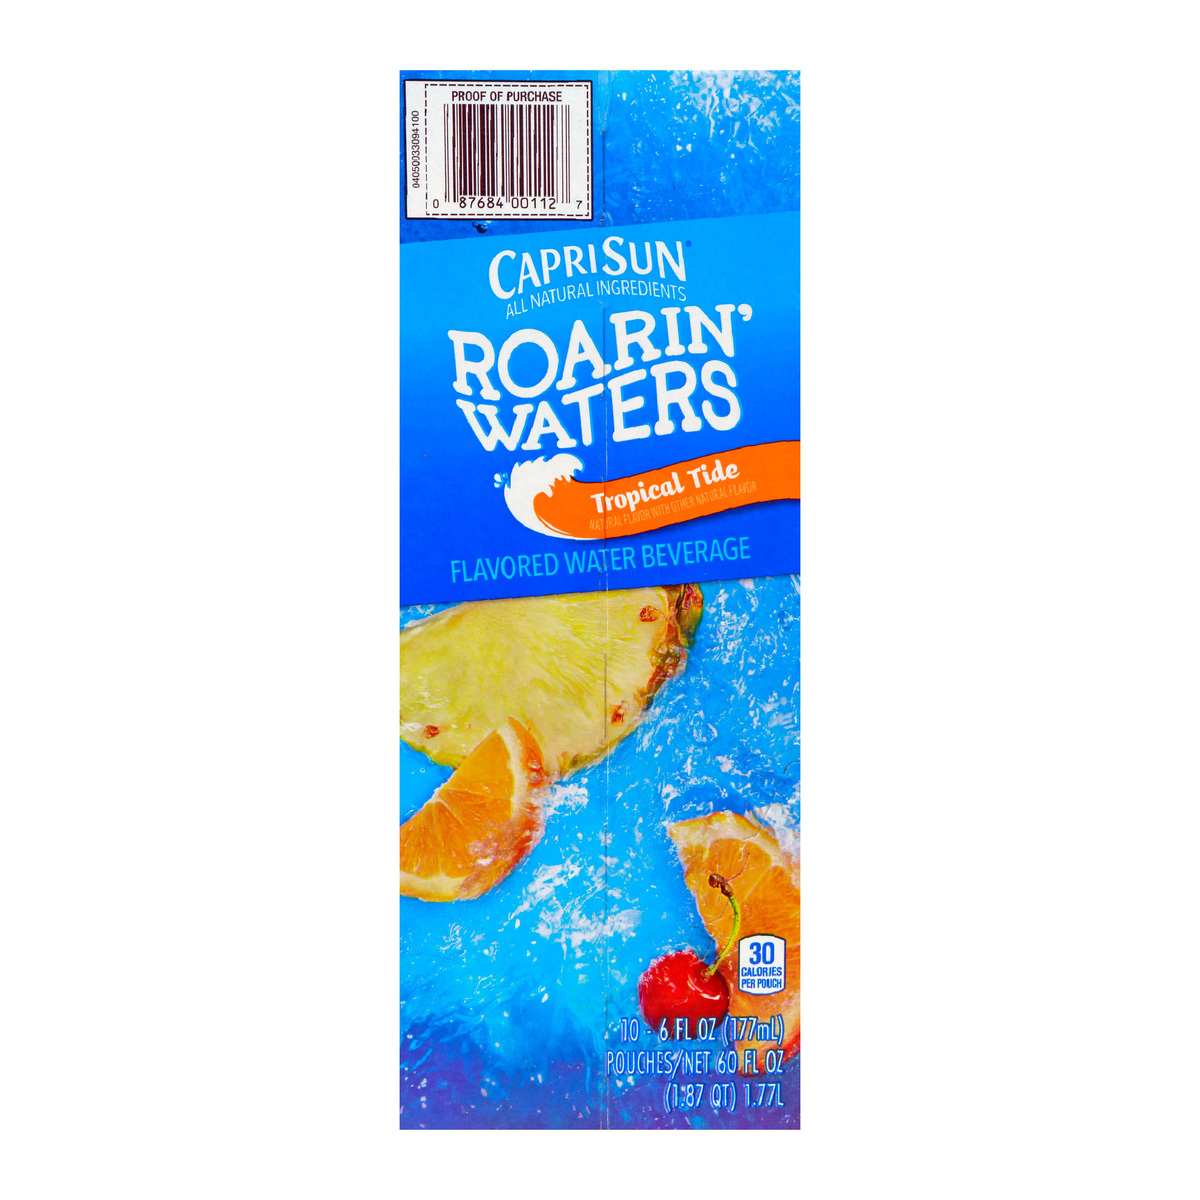 Capri Sun Flavored Water Beverage Roarin' Waters Tropical Tide 1.77Litre